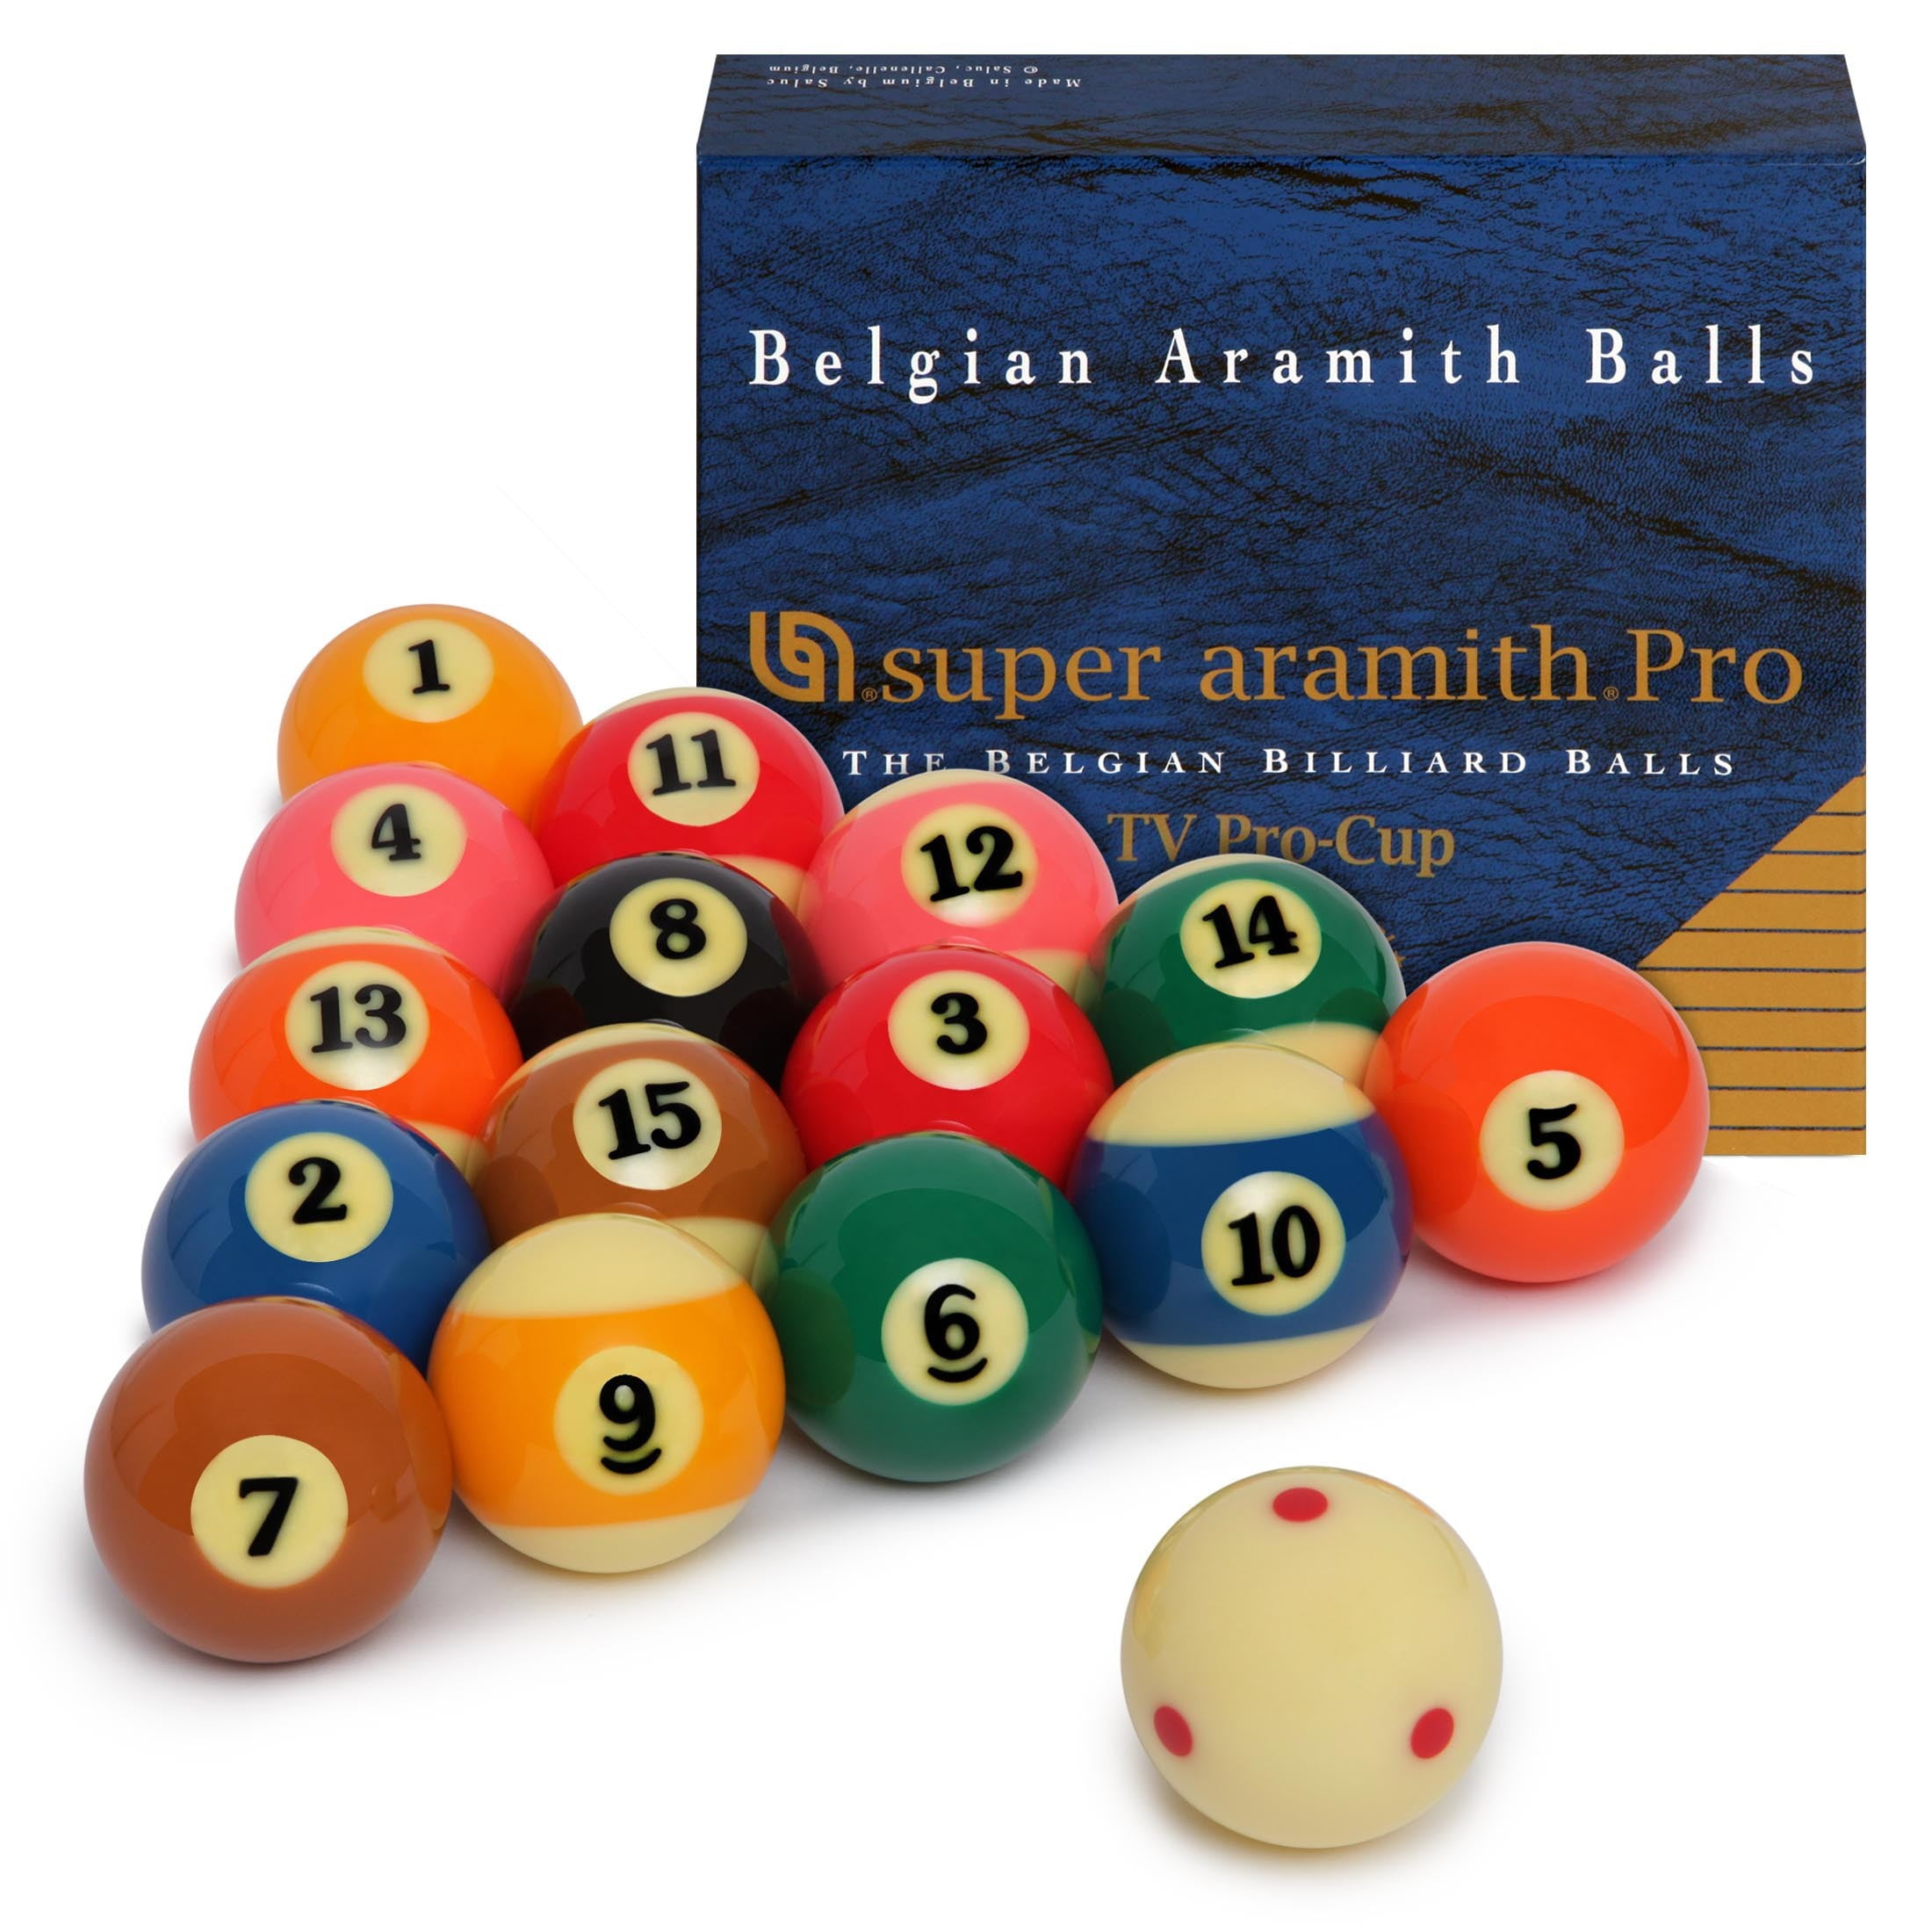 Belgian Aramith Premium Pool Balls 6 Sets for sale online 